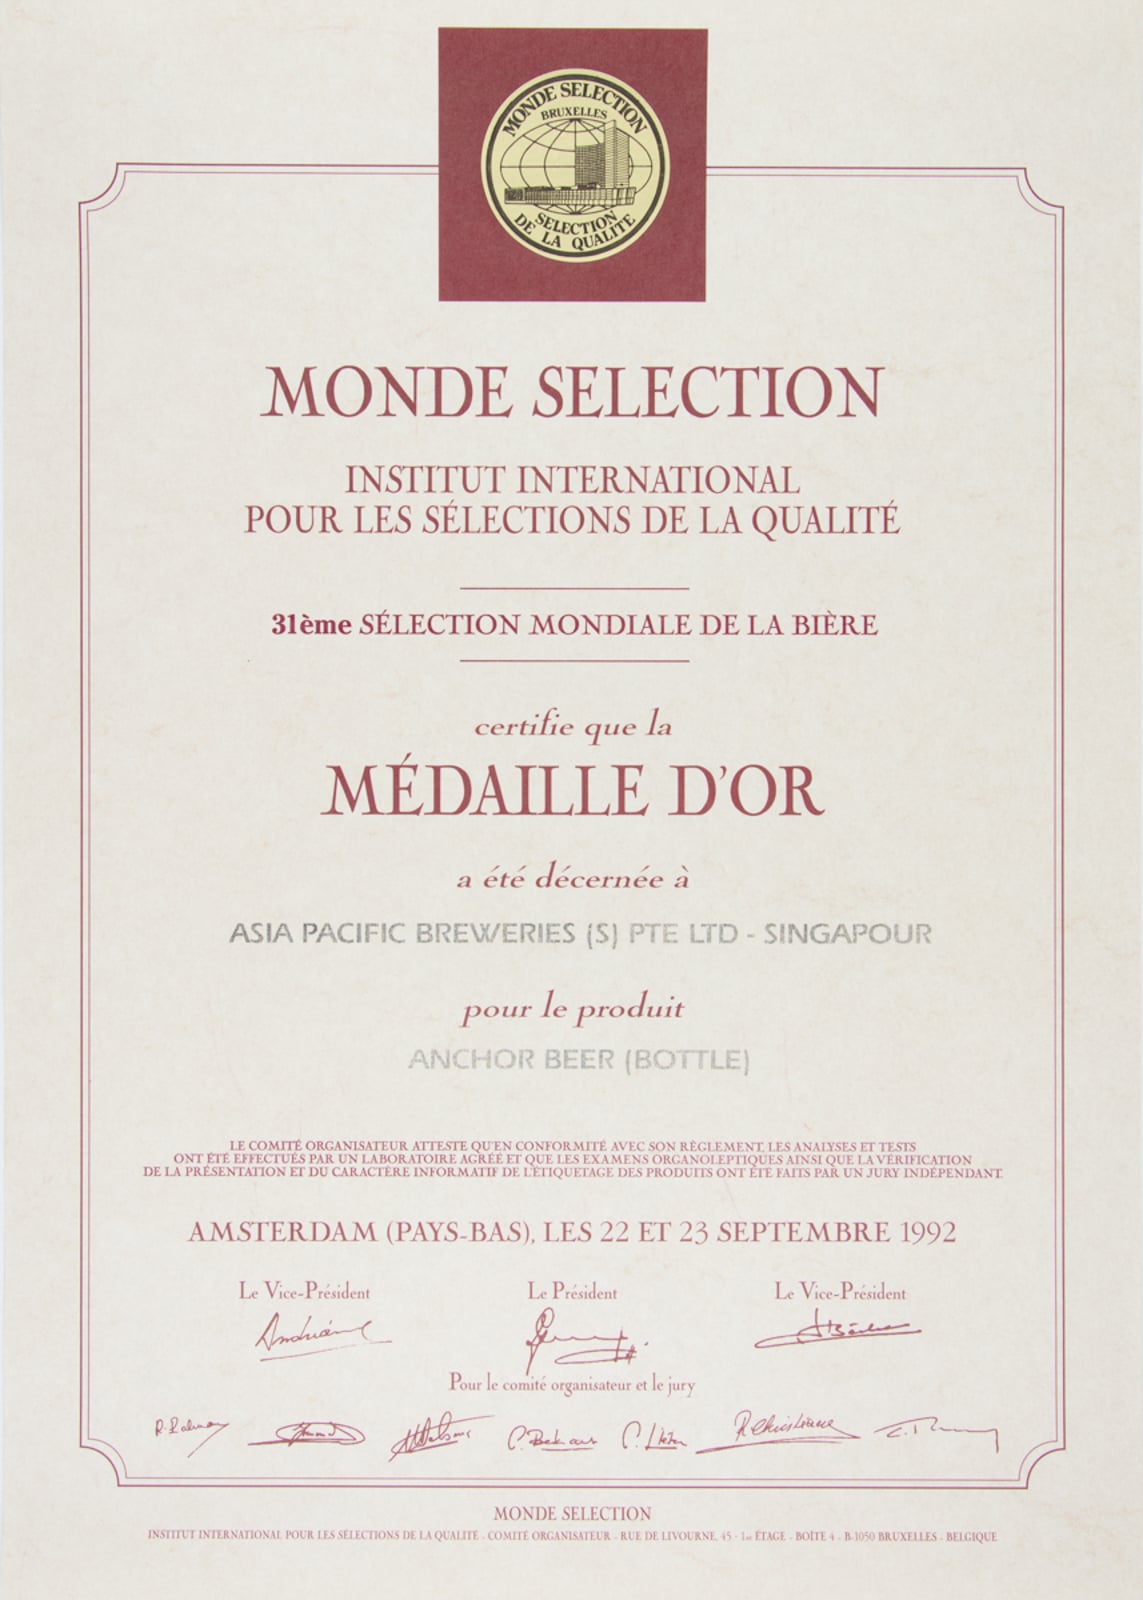 Anchor Beer (Bottle) Médaille d'Or, Monde Sélection Certificate 1992